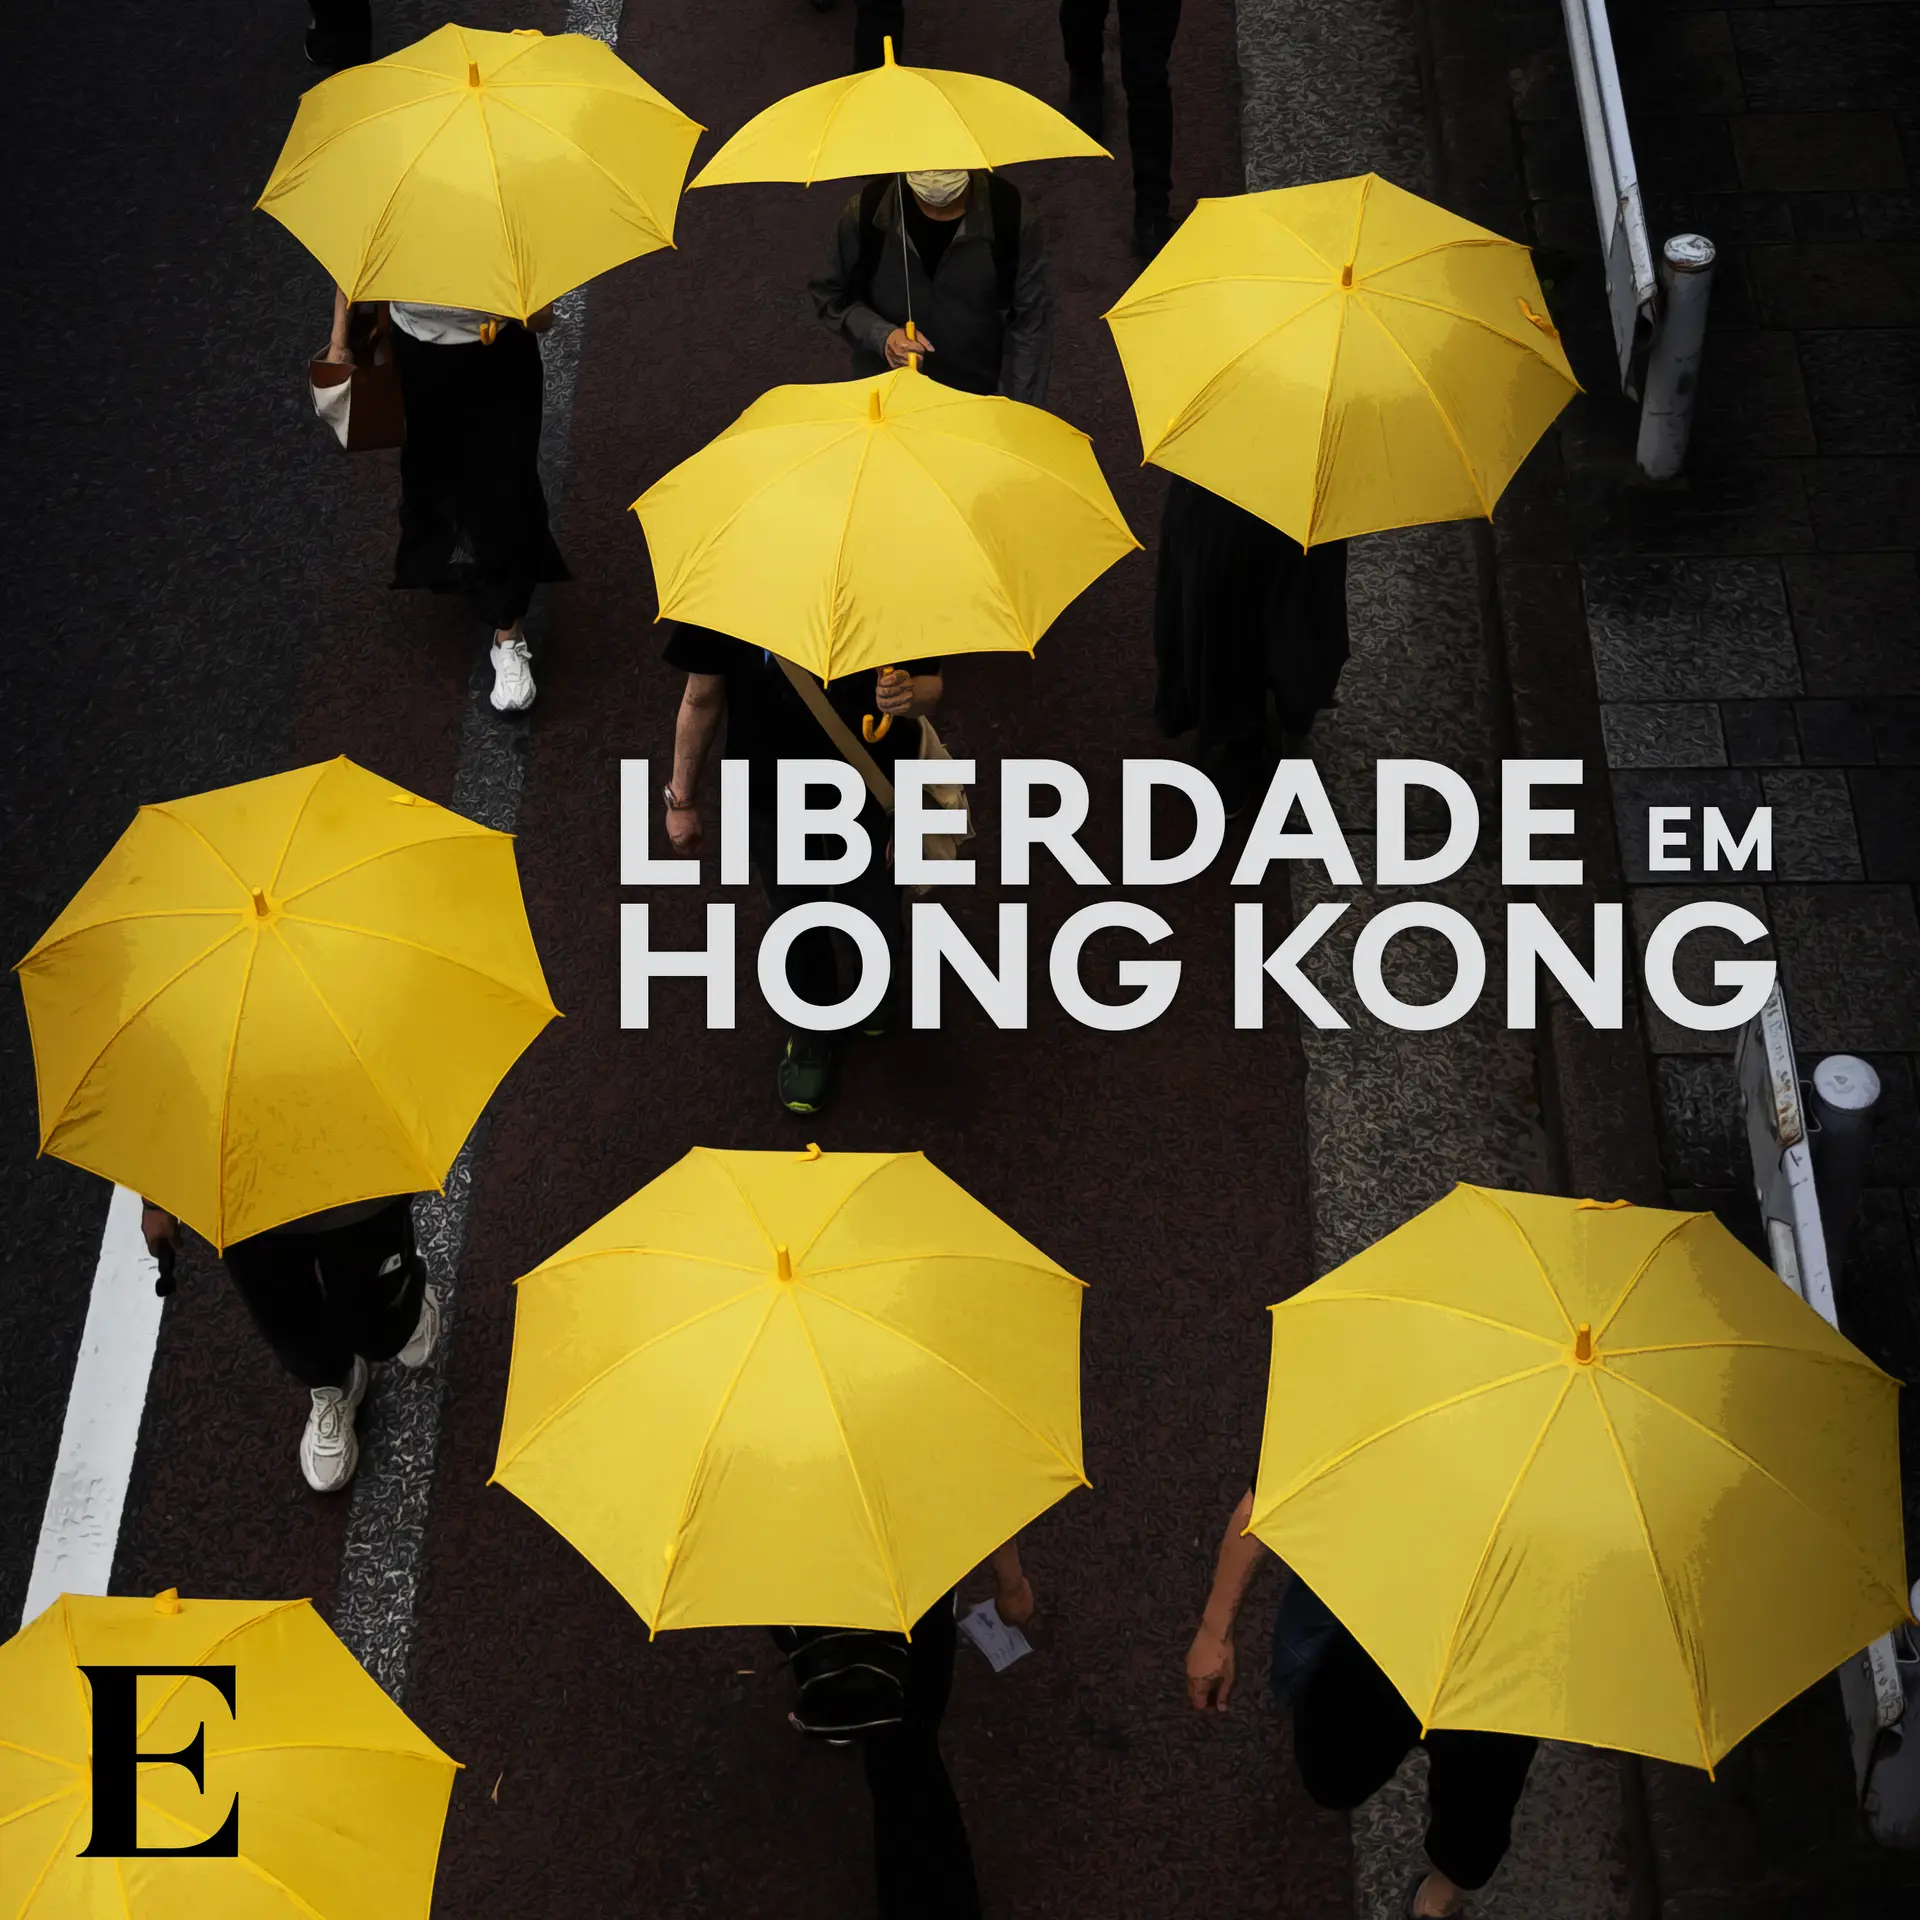 Liberdade em Hong Kong